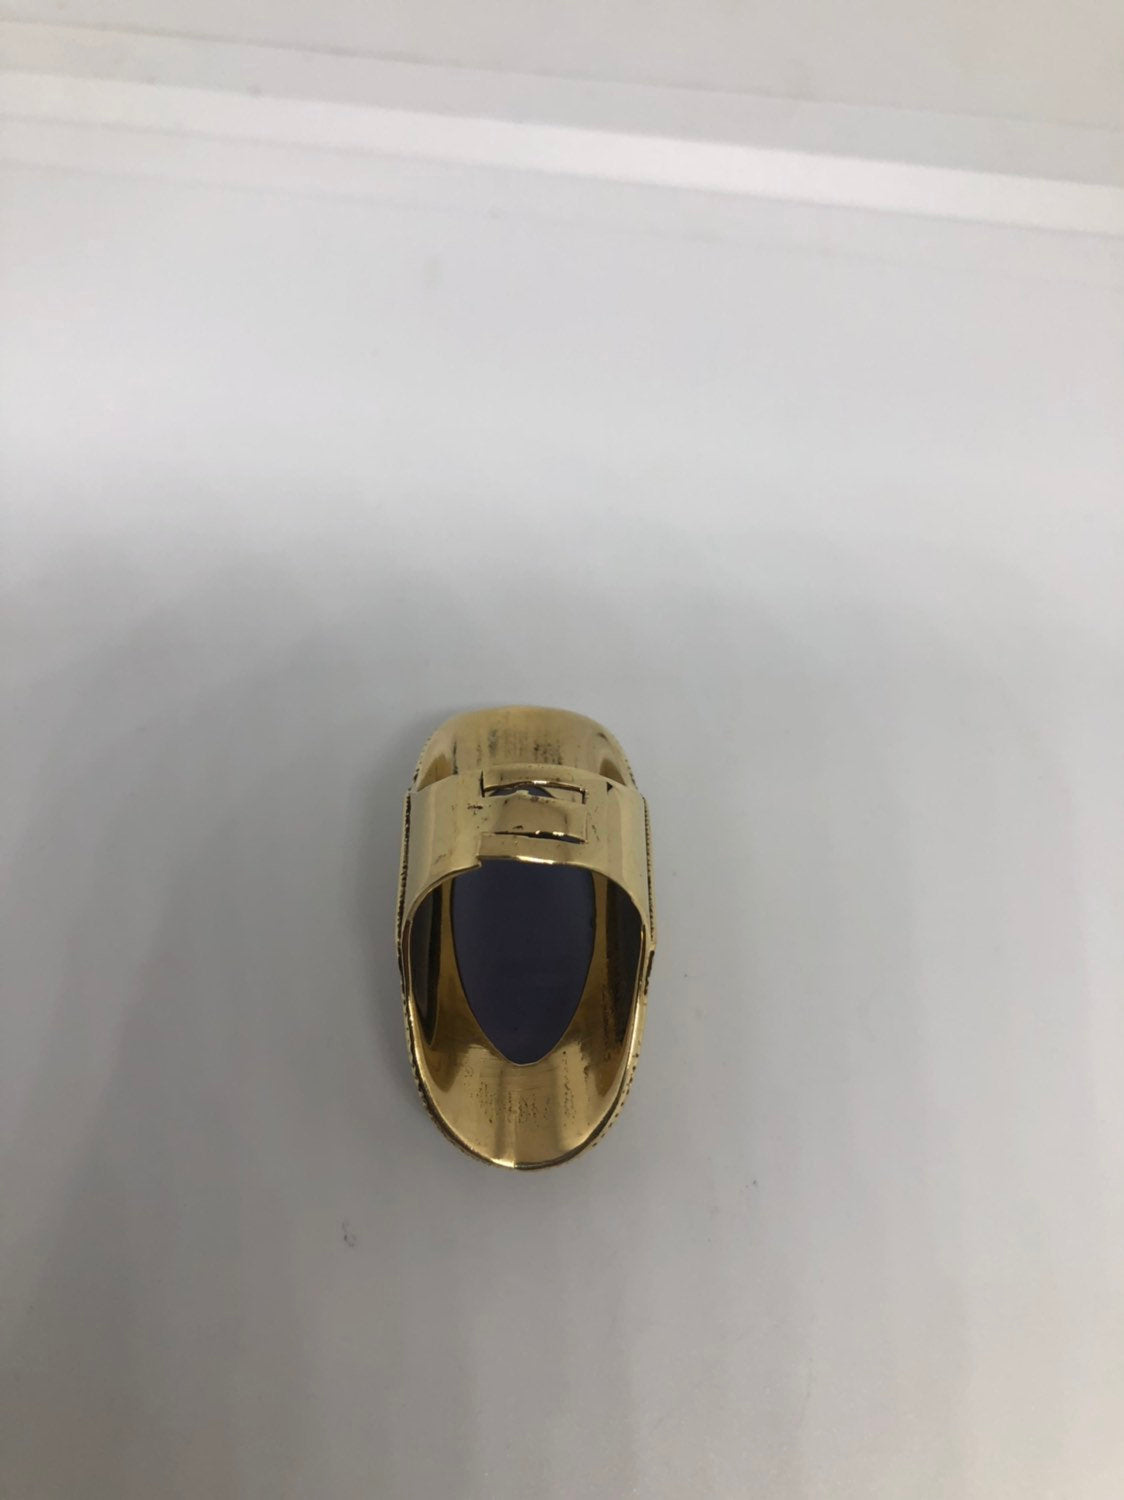 Amethyst Brass Knuckle Adjustable Ring